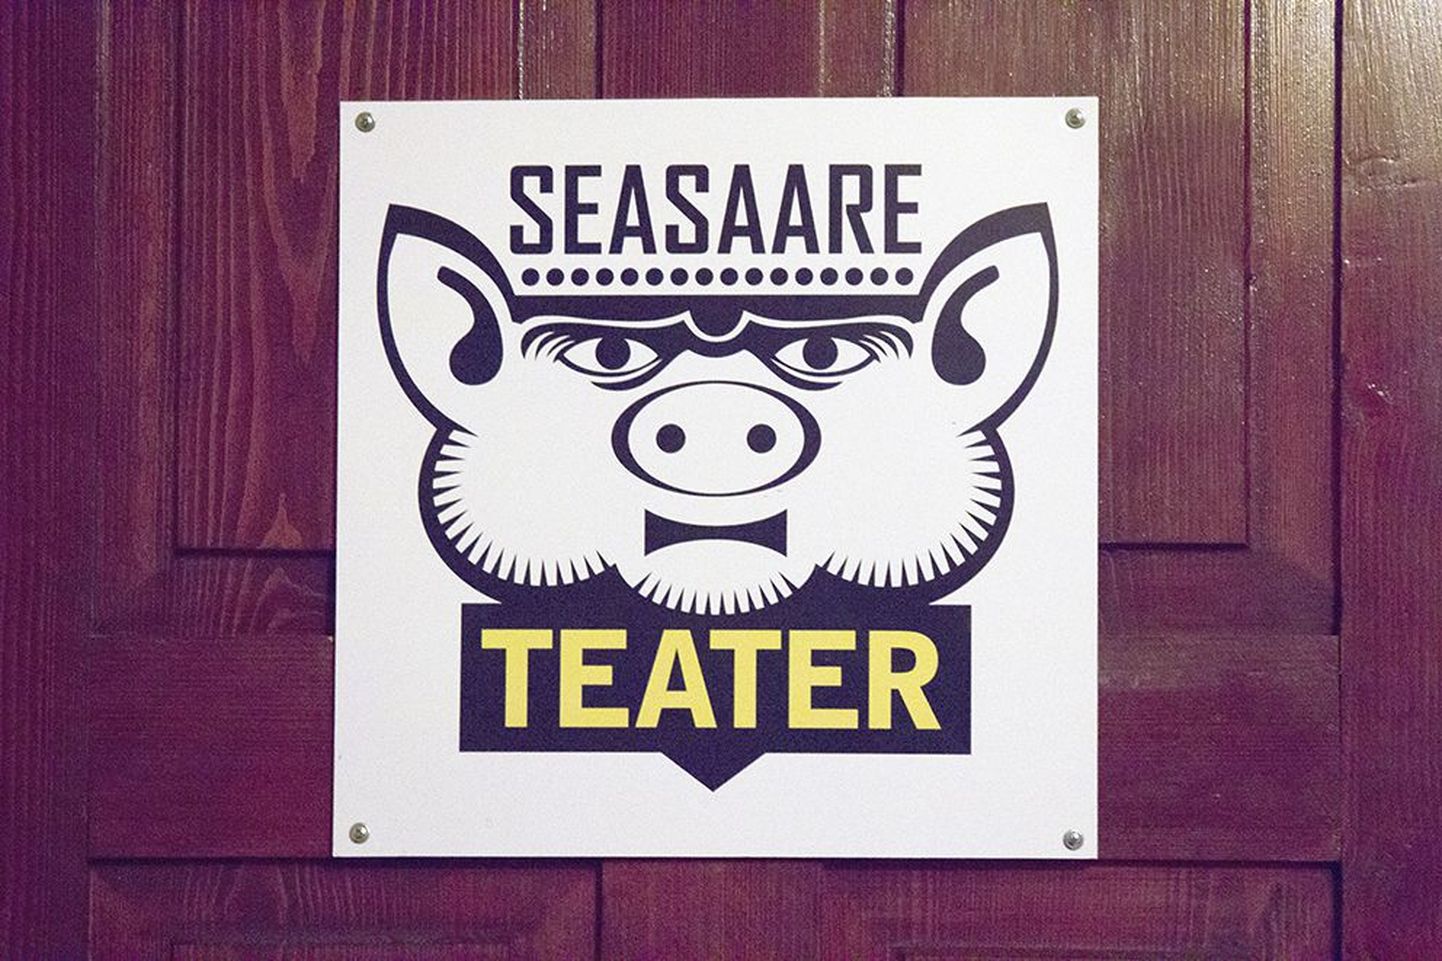 Seasaare teatri logo